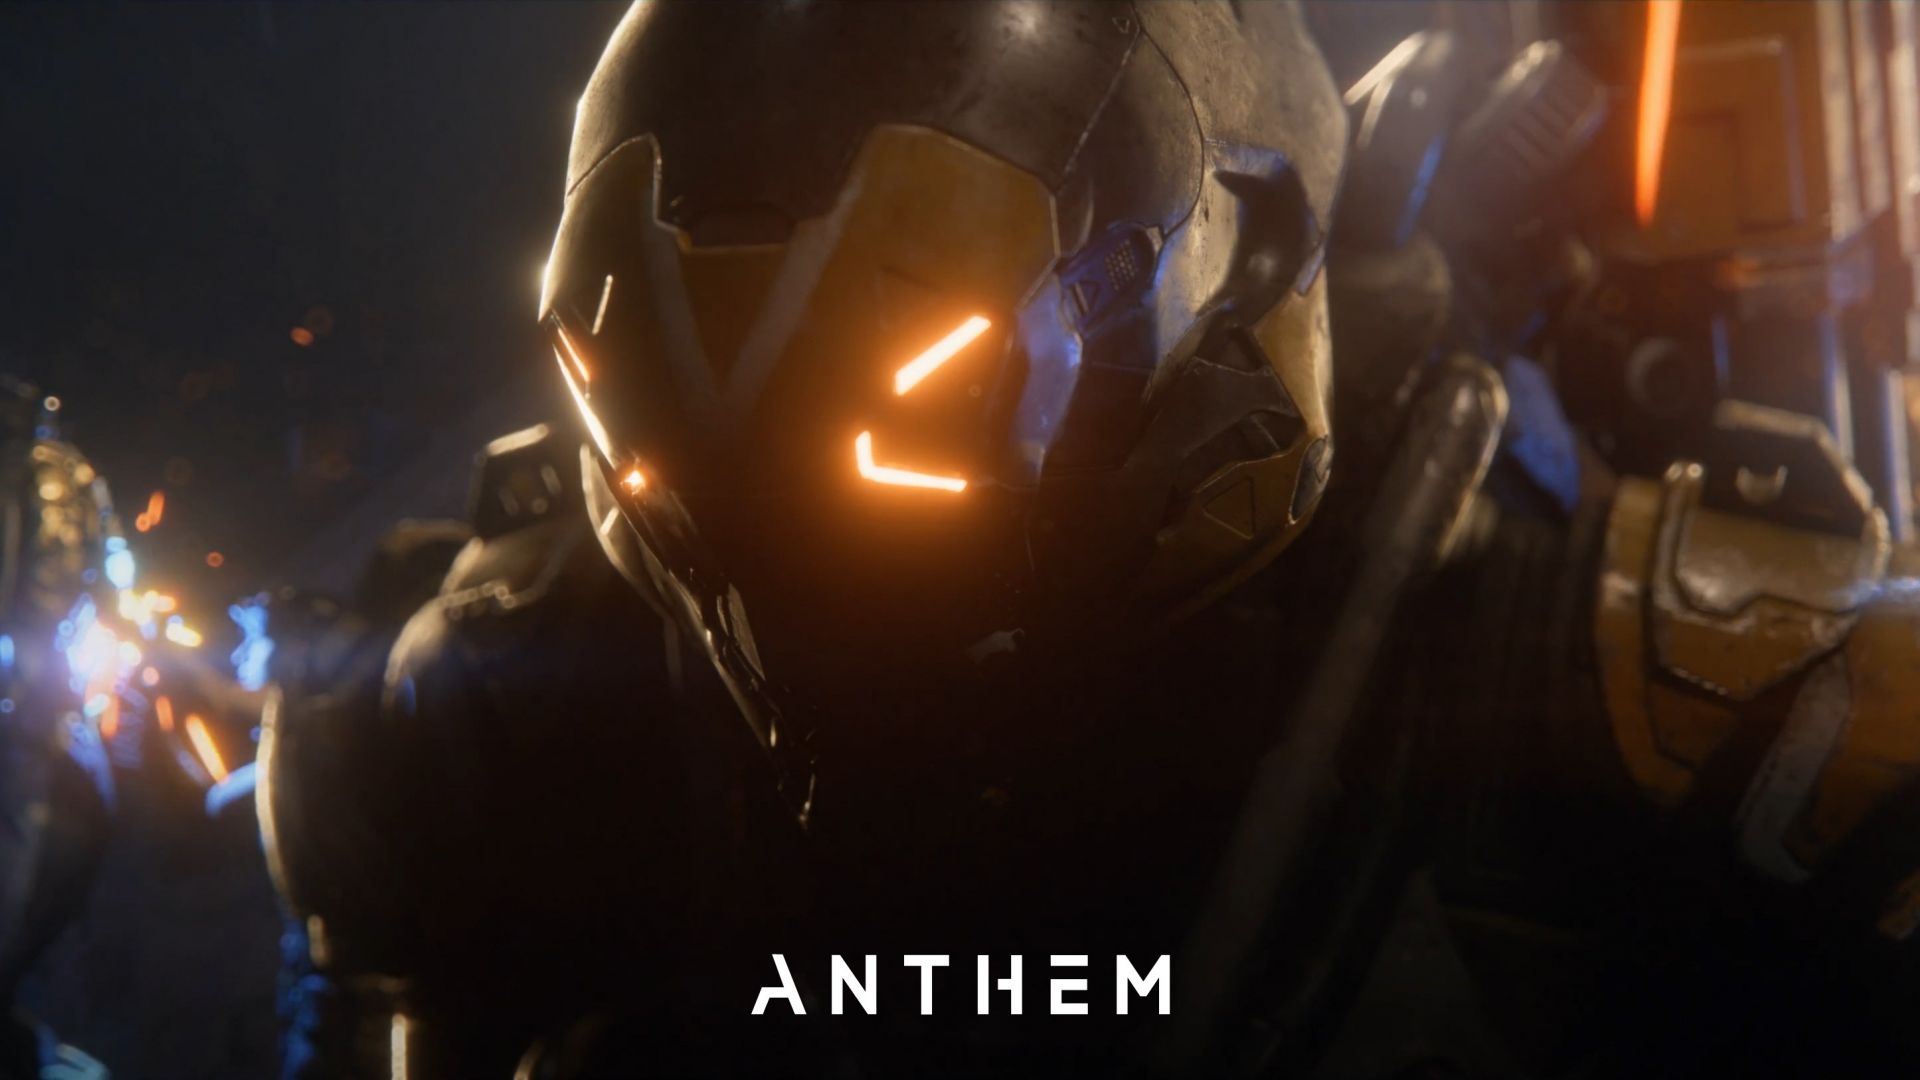 Wallpaper Anthem, 2018 game, video game, soldier, dark